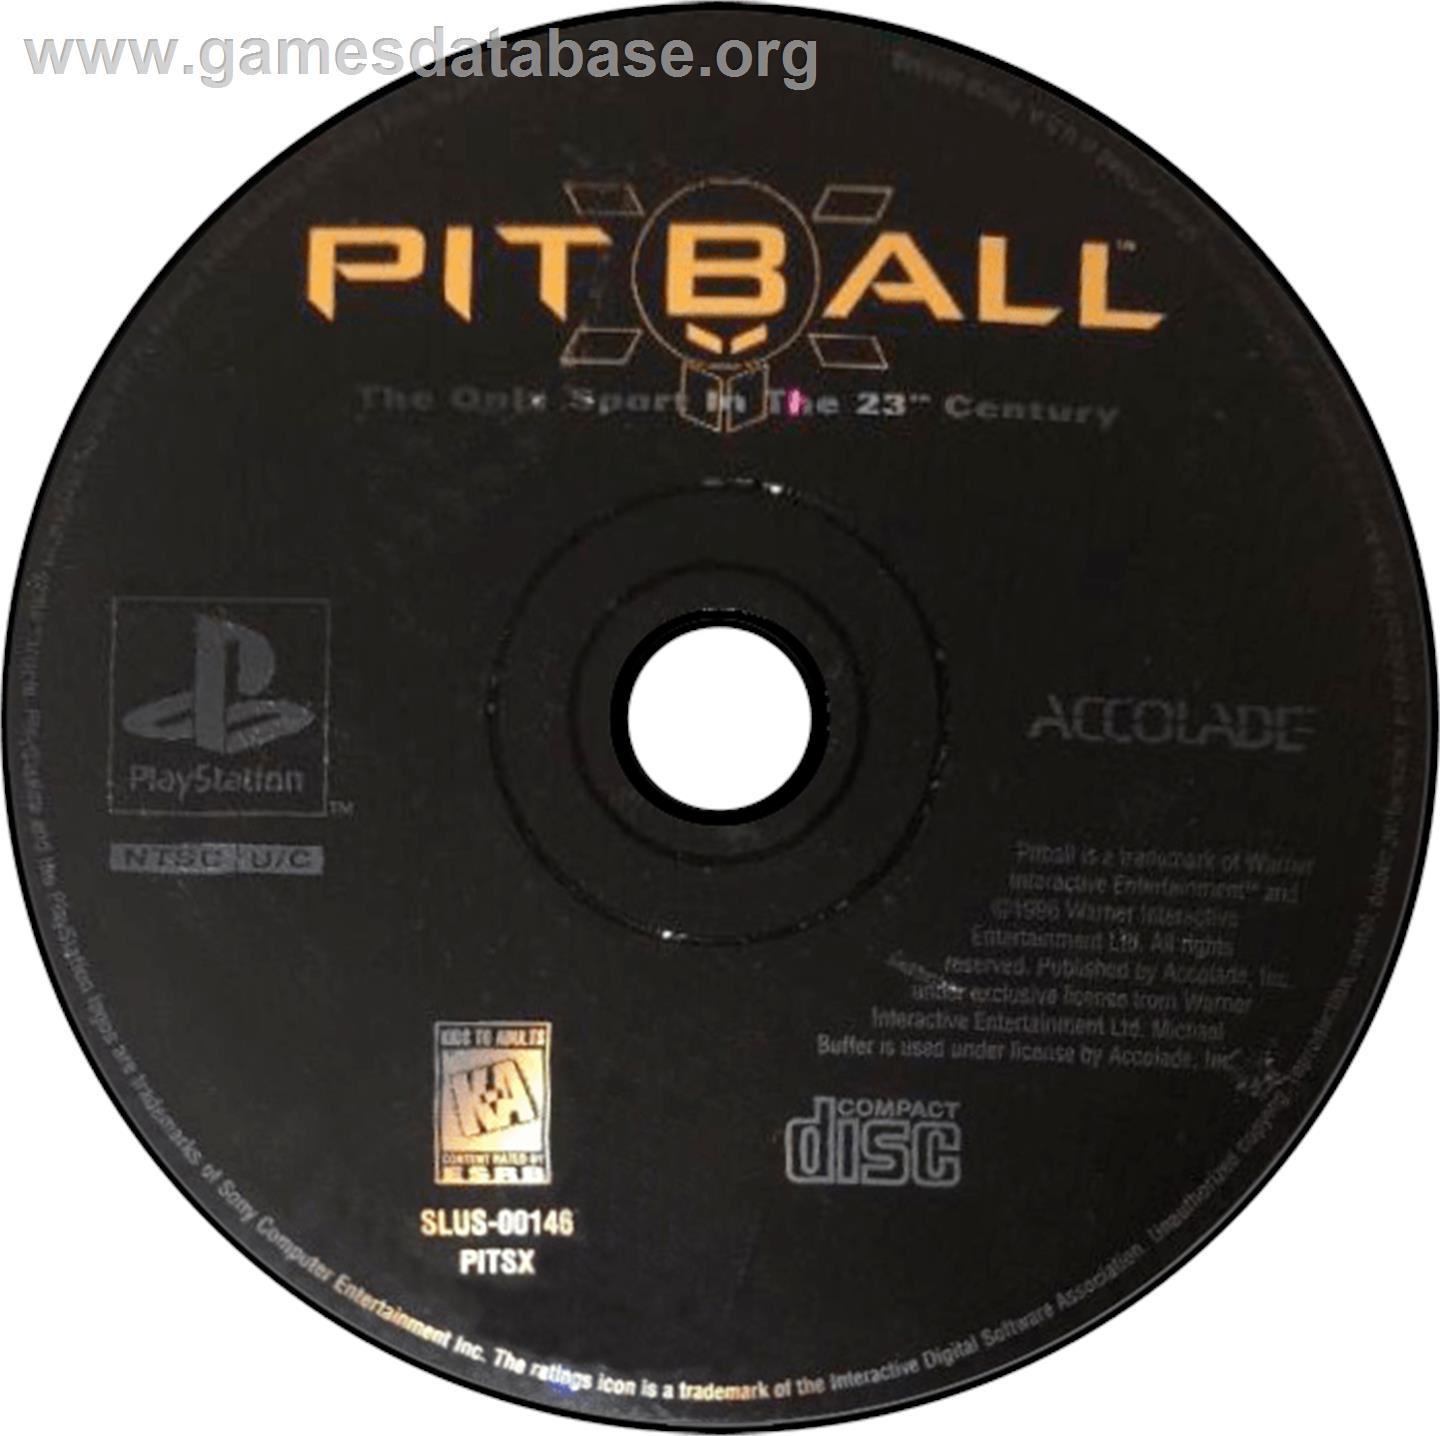 Pitball - Sony Playstation - Artwork - Disc